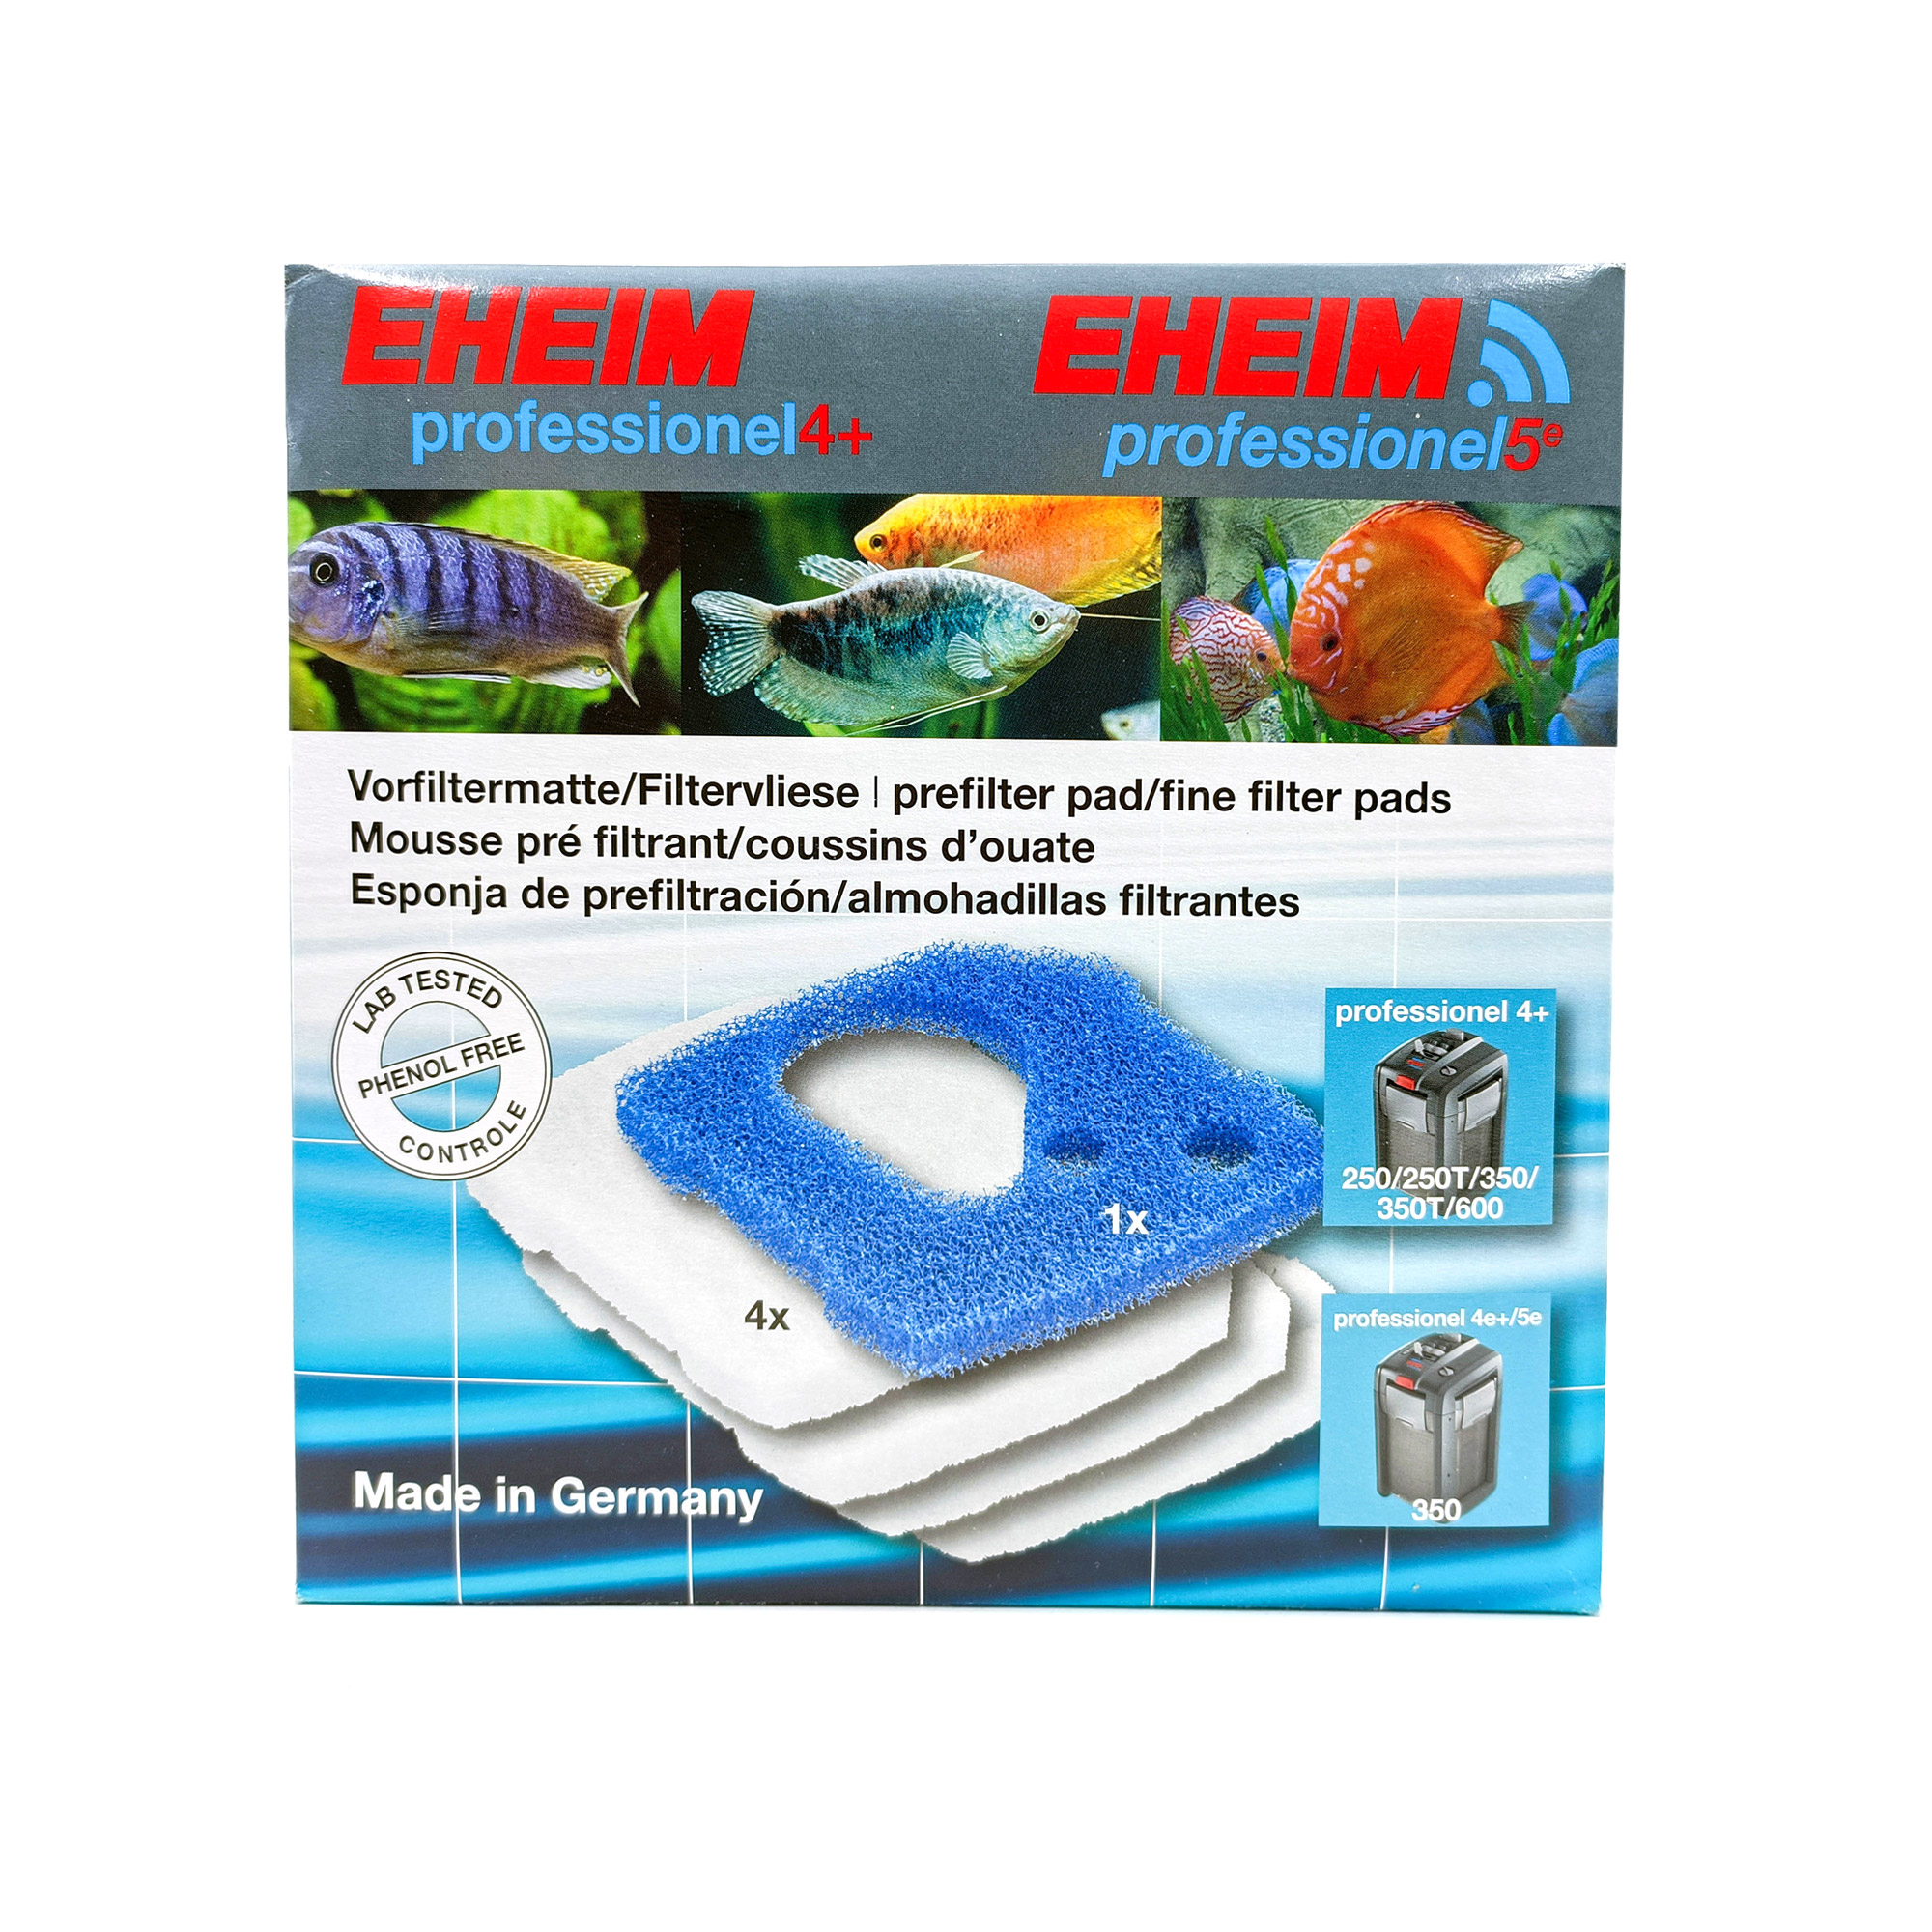 EHEIM professionel 4+ filter pad ชุดแผ่นกรอง ใยหยาบ ใยละเอียด สำหรับเครื่องกรองนอก EHEIM Professionel รุ่น 4 และ 5